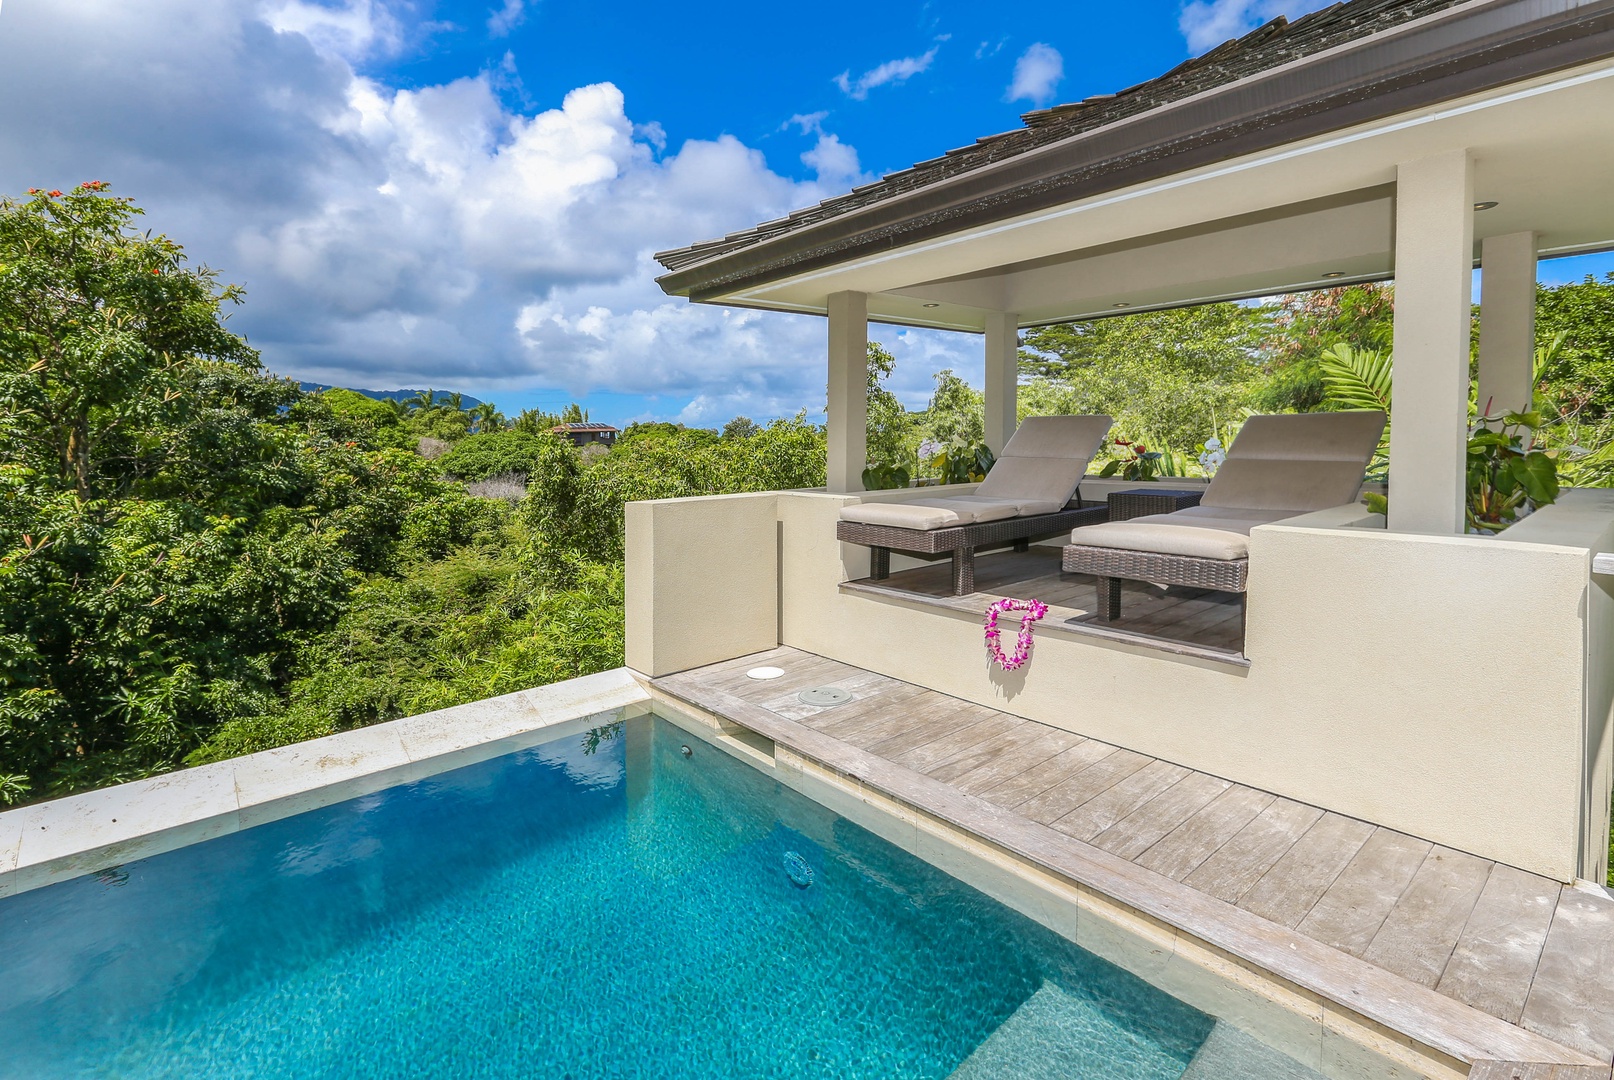 Princeville Vacation Rentals, Laulea Kailani Villa (KAUAI) - Take a dip under the Hawaiian sunshine and indulge in the beauty of nature vistas